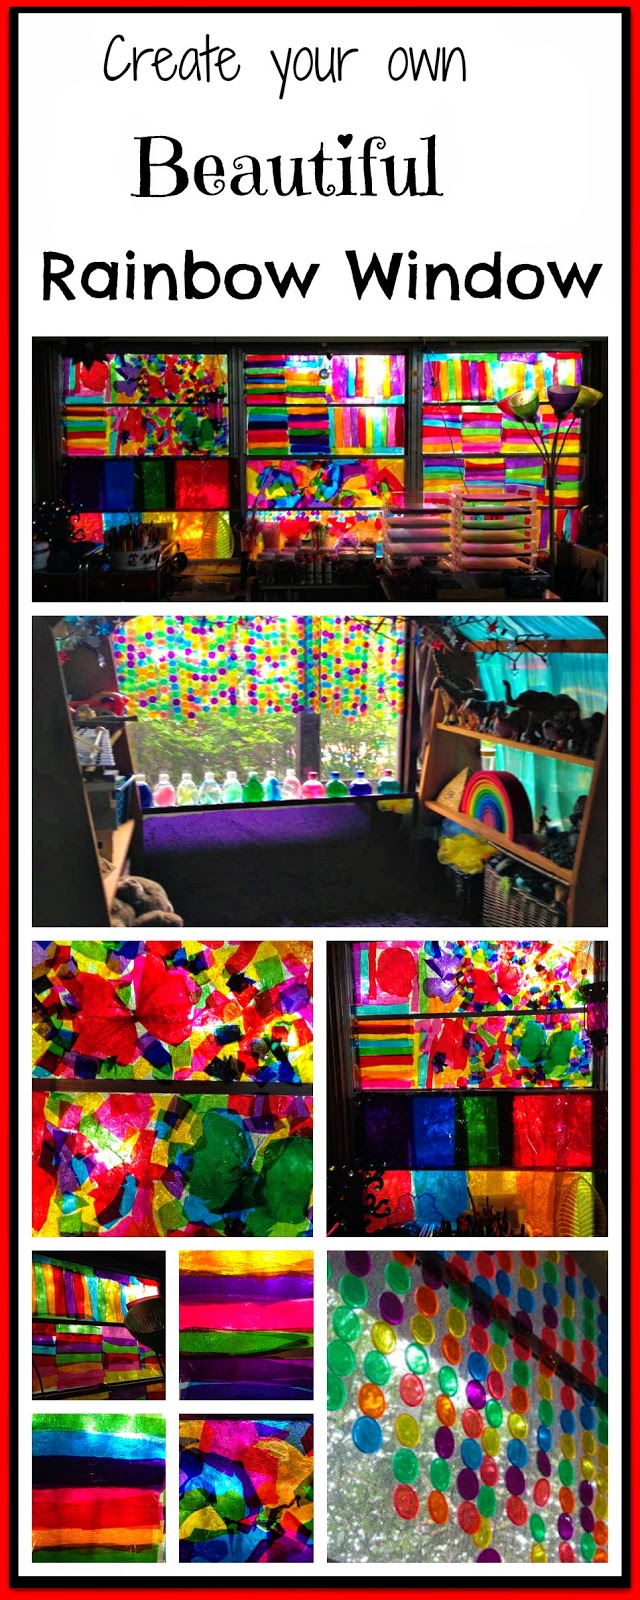 Reggio inspired rainbow window that casts color around the room